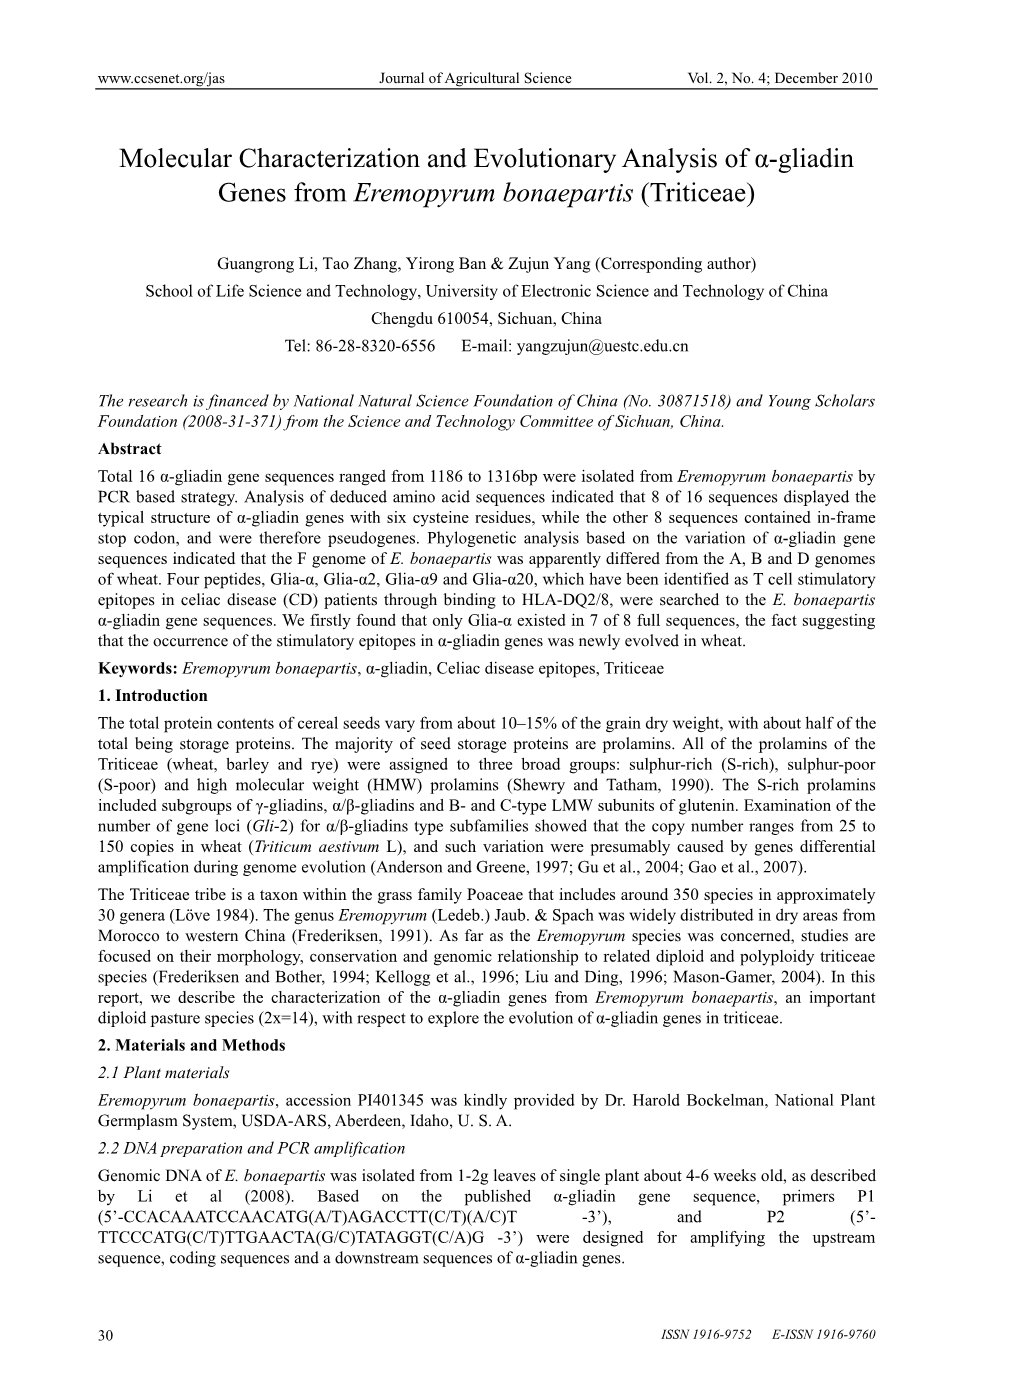 Molecular Characterization and Evolutionary Analysis of Α-Gliadin Genes from Eremopyrum Bonaepartis (Triticeae)